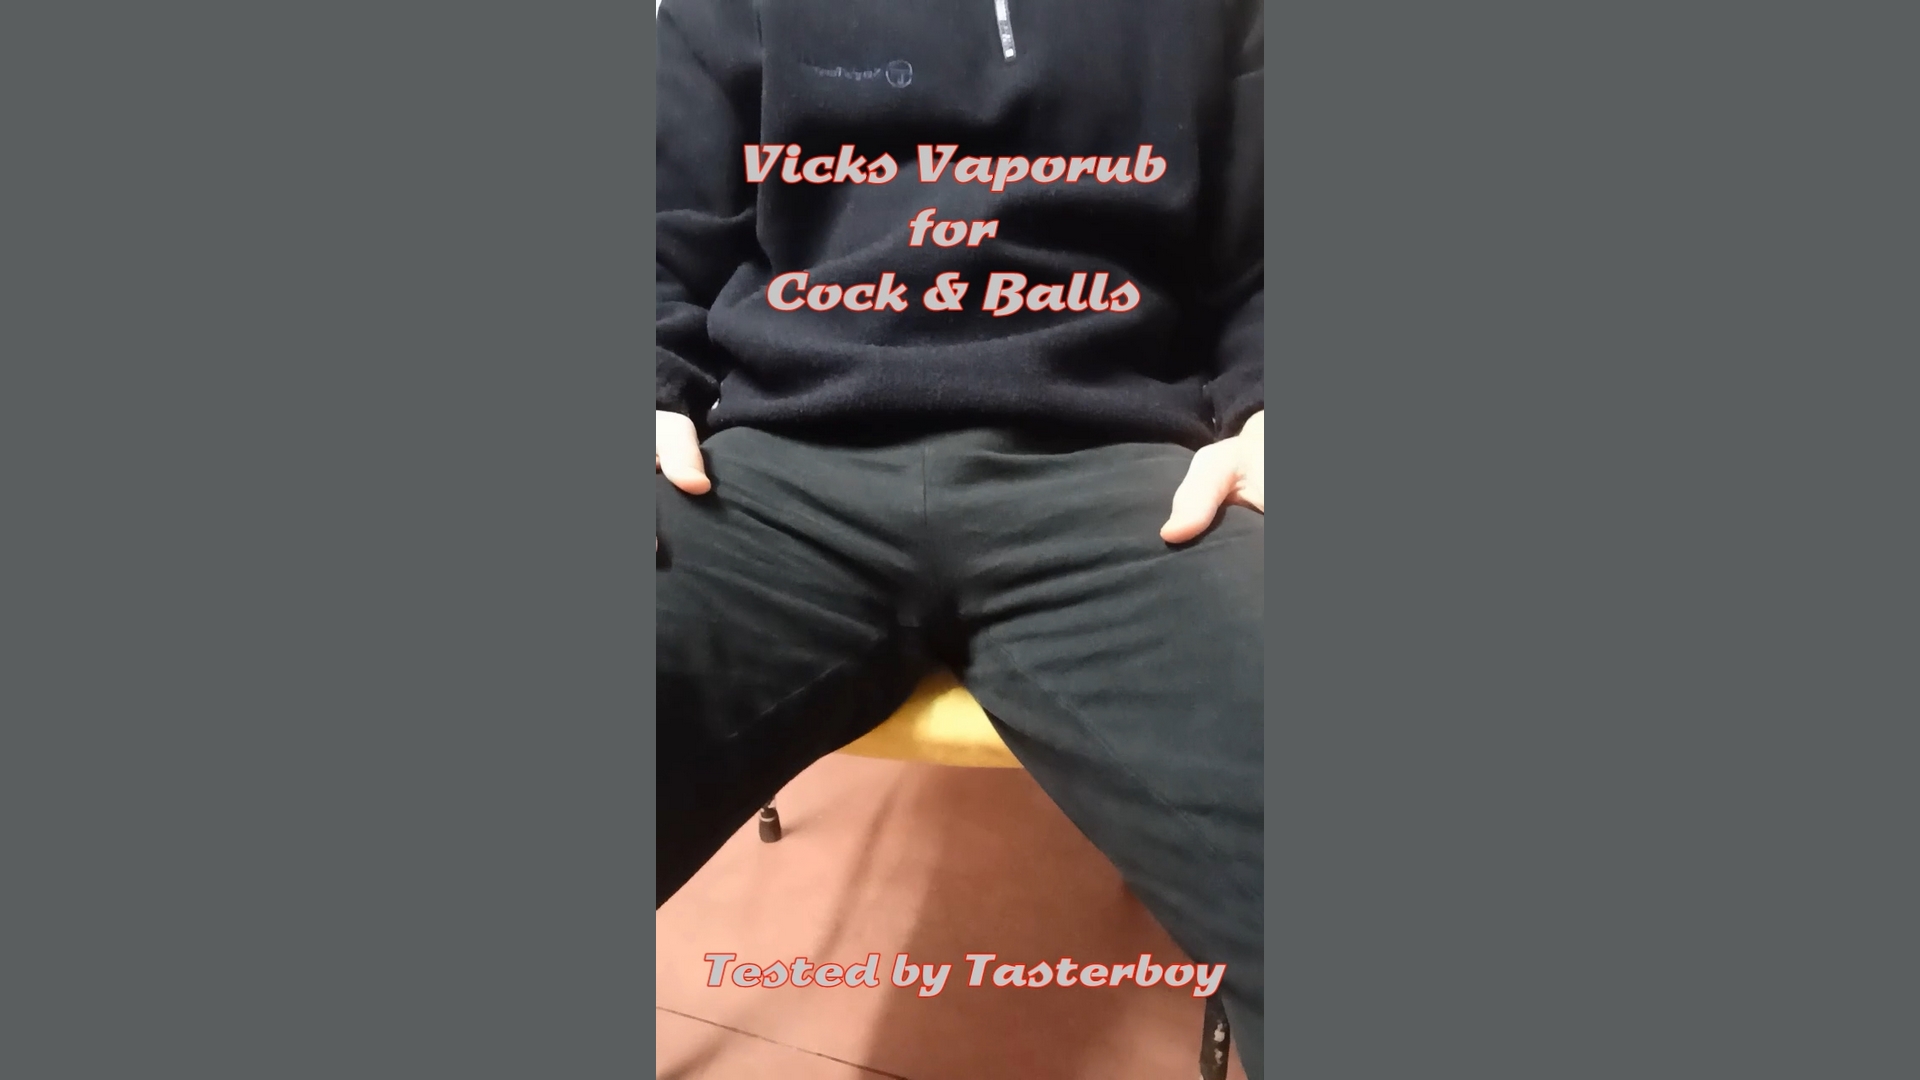 Tasterboy is testing Vicks Vaporub on his genitals